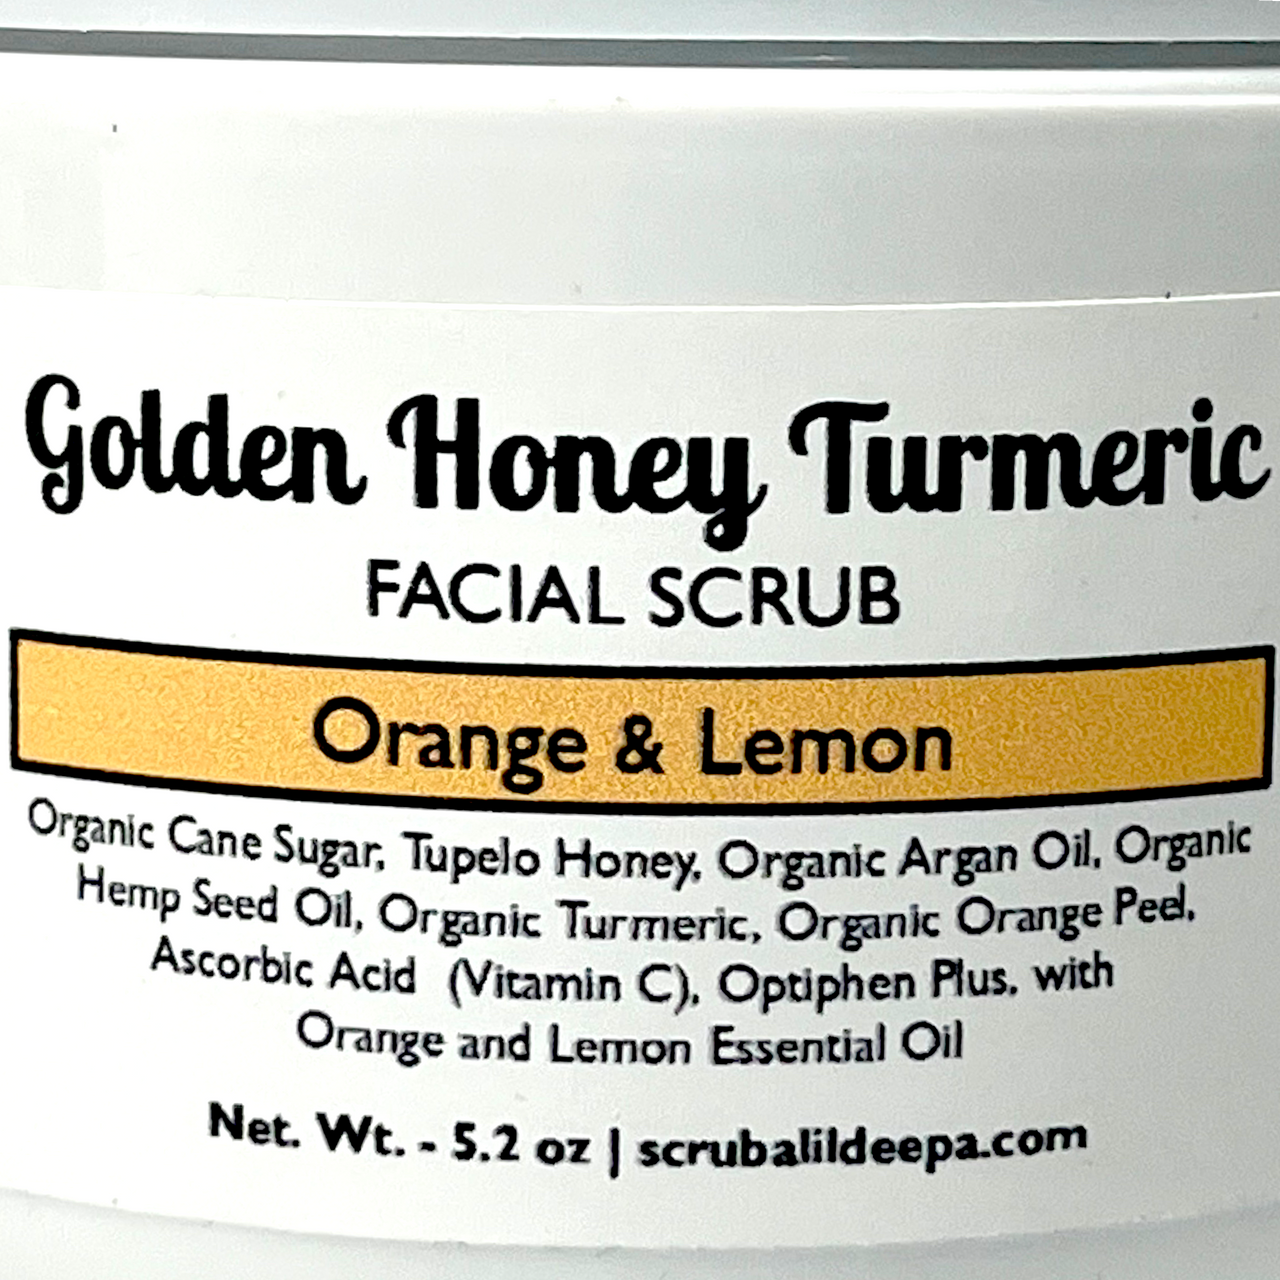 Golden Honey Turmeric Facial Scrub - Orange & Lemon